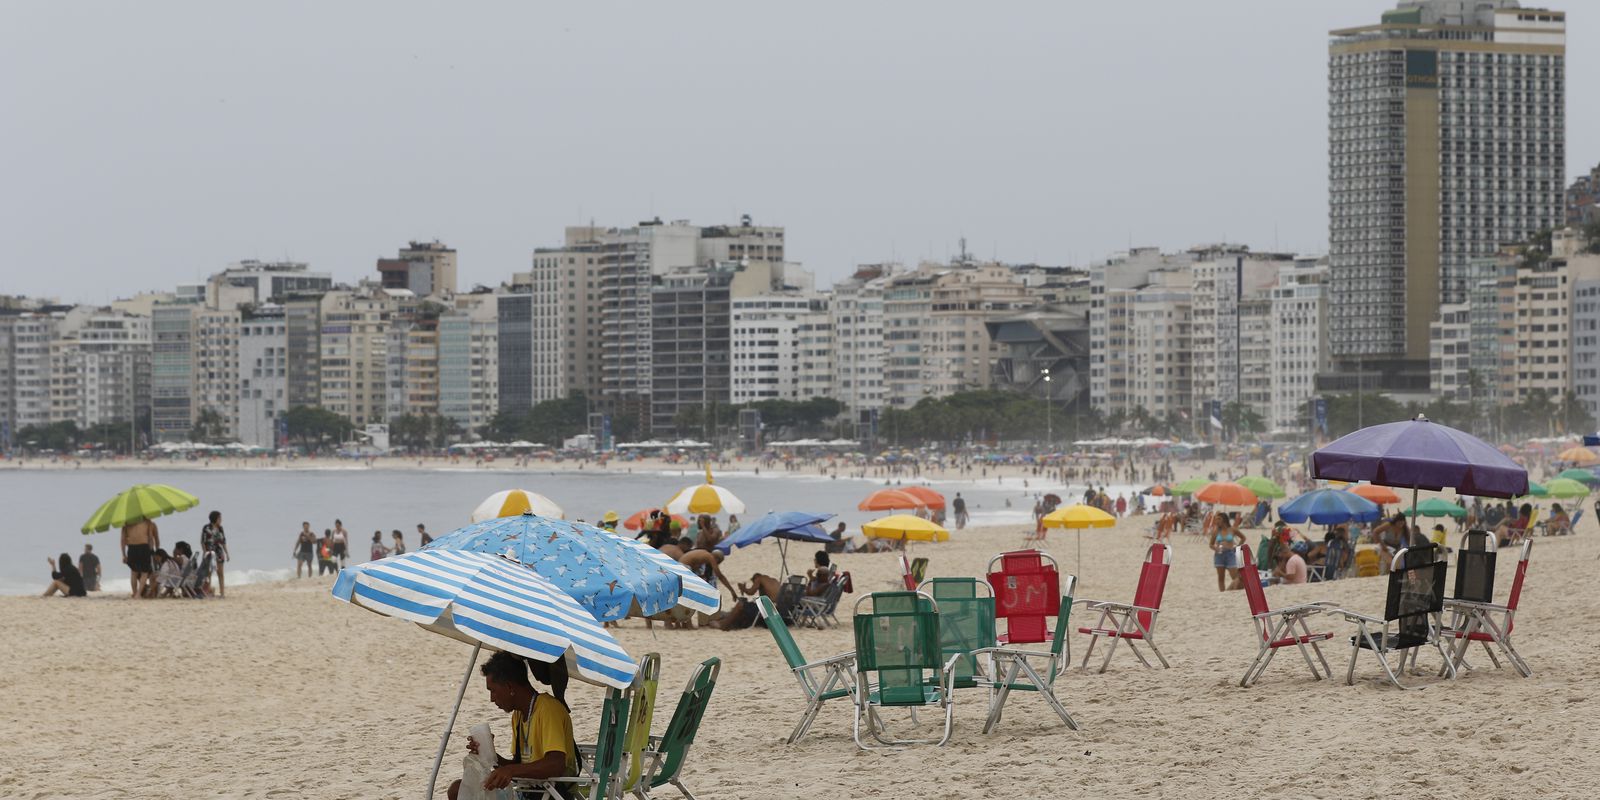 Municipal decree prohibits speakers on beaches in Rio de Janeiro